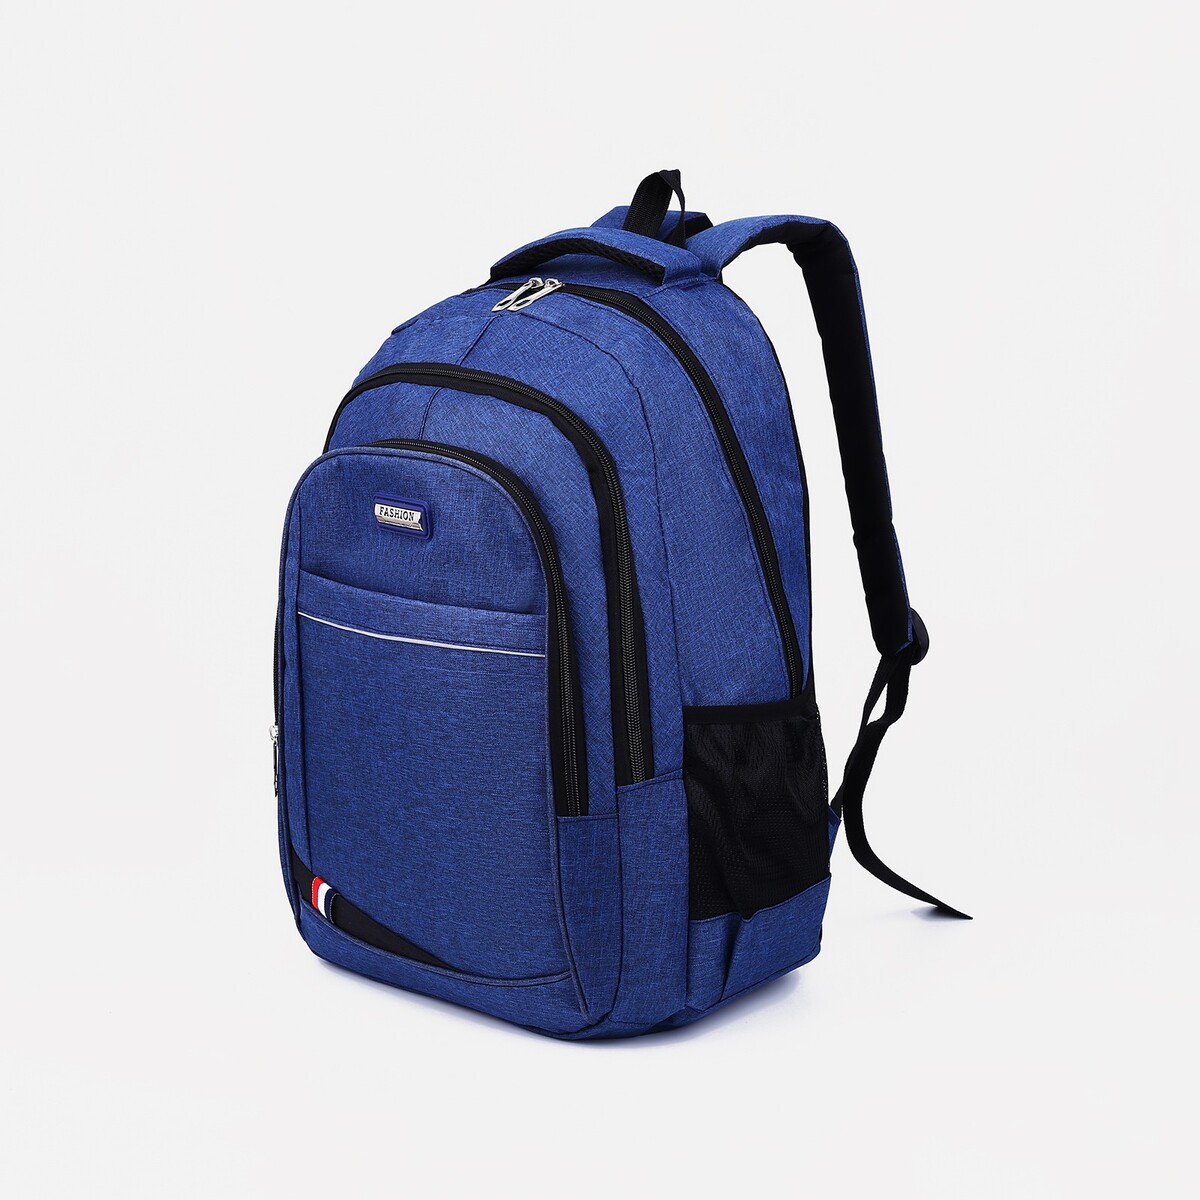 Рюкзак на молнии, 2 наружных кармана, цвет синий рюкзак детский на молнии 3 наружных кармана синий